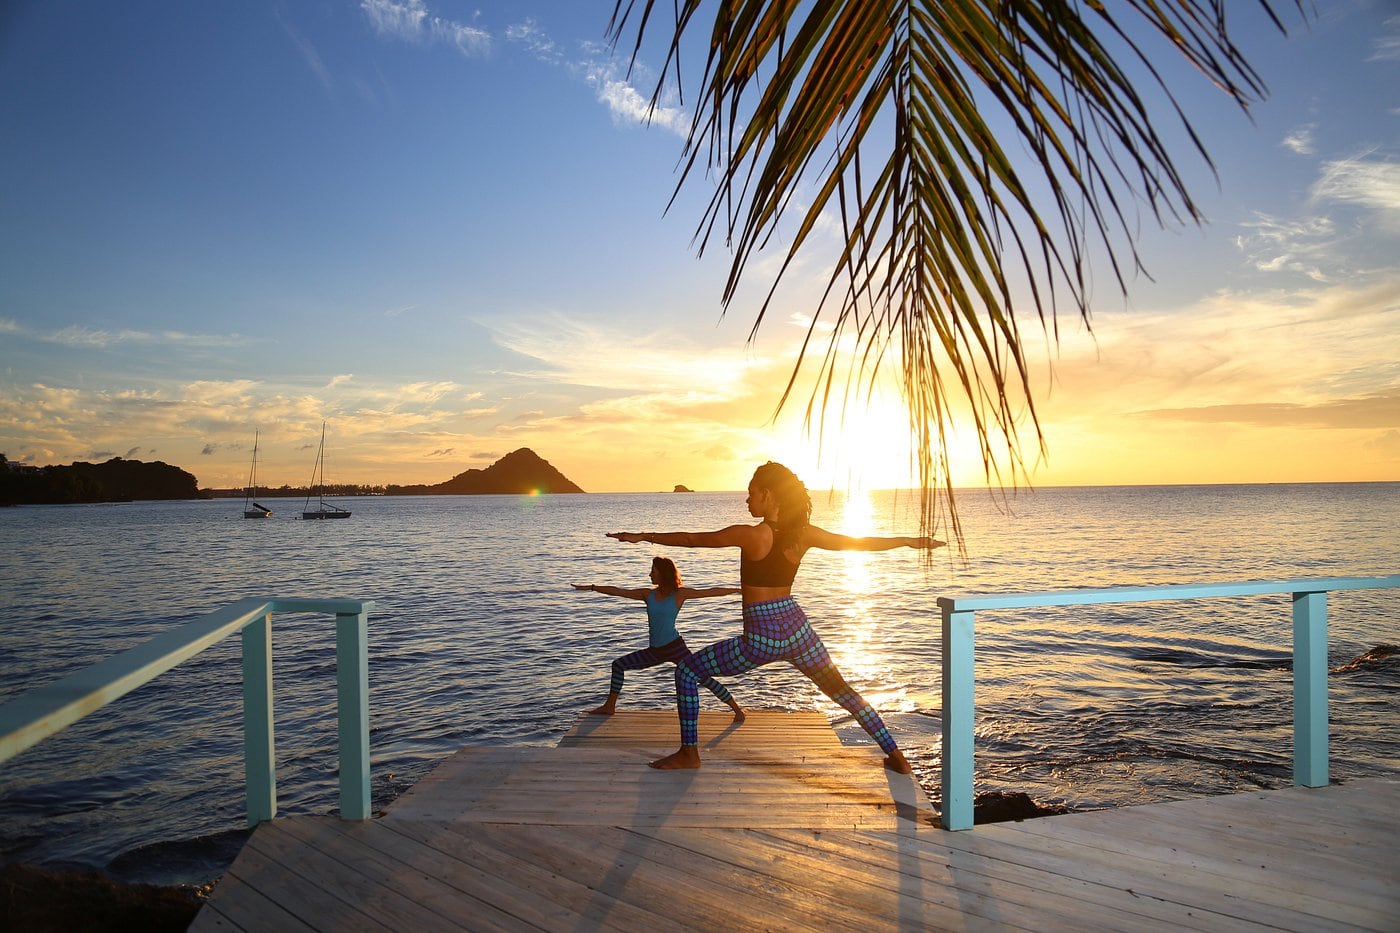 woman doing yoga at sunset